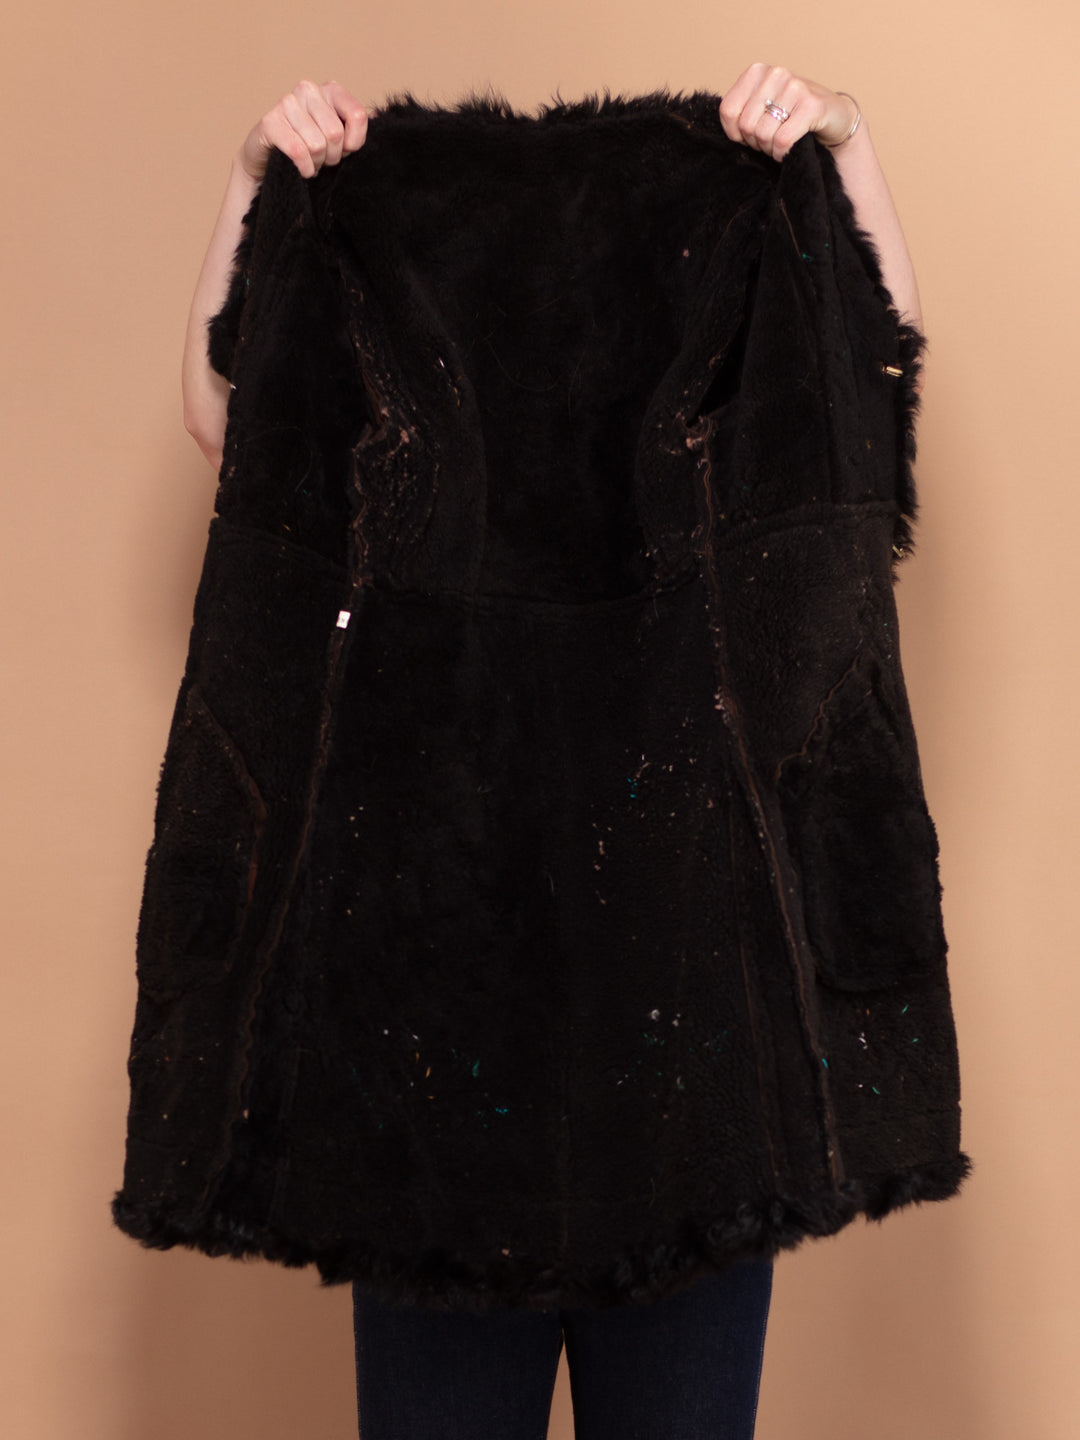 Embroidered Penny Lane Coat 70's, Size Small, Vintage Afghan Coat, Women Dark Brown Sheepskin Coat, Fur Trim Warm Winter Shearling Coat